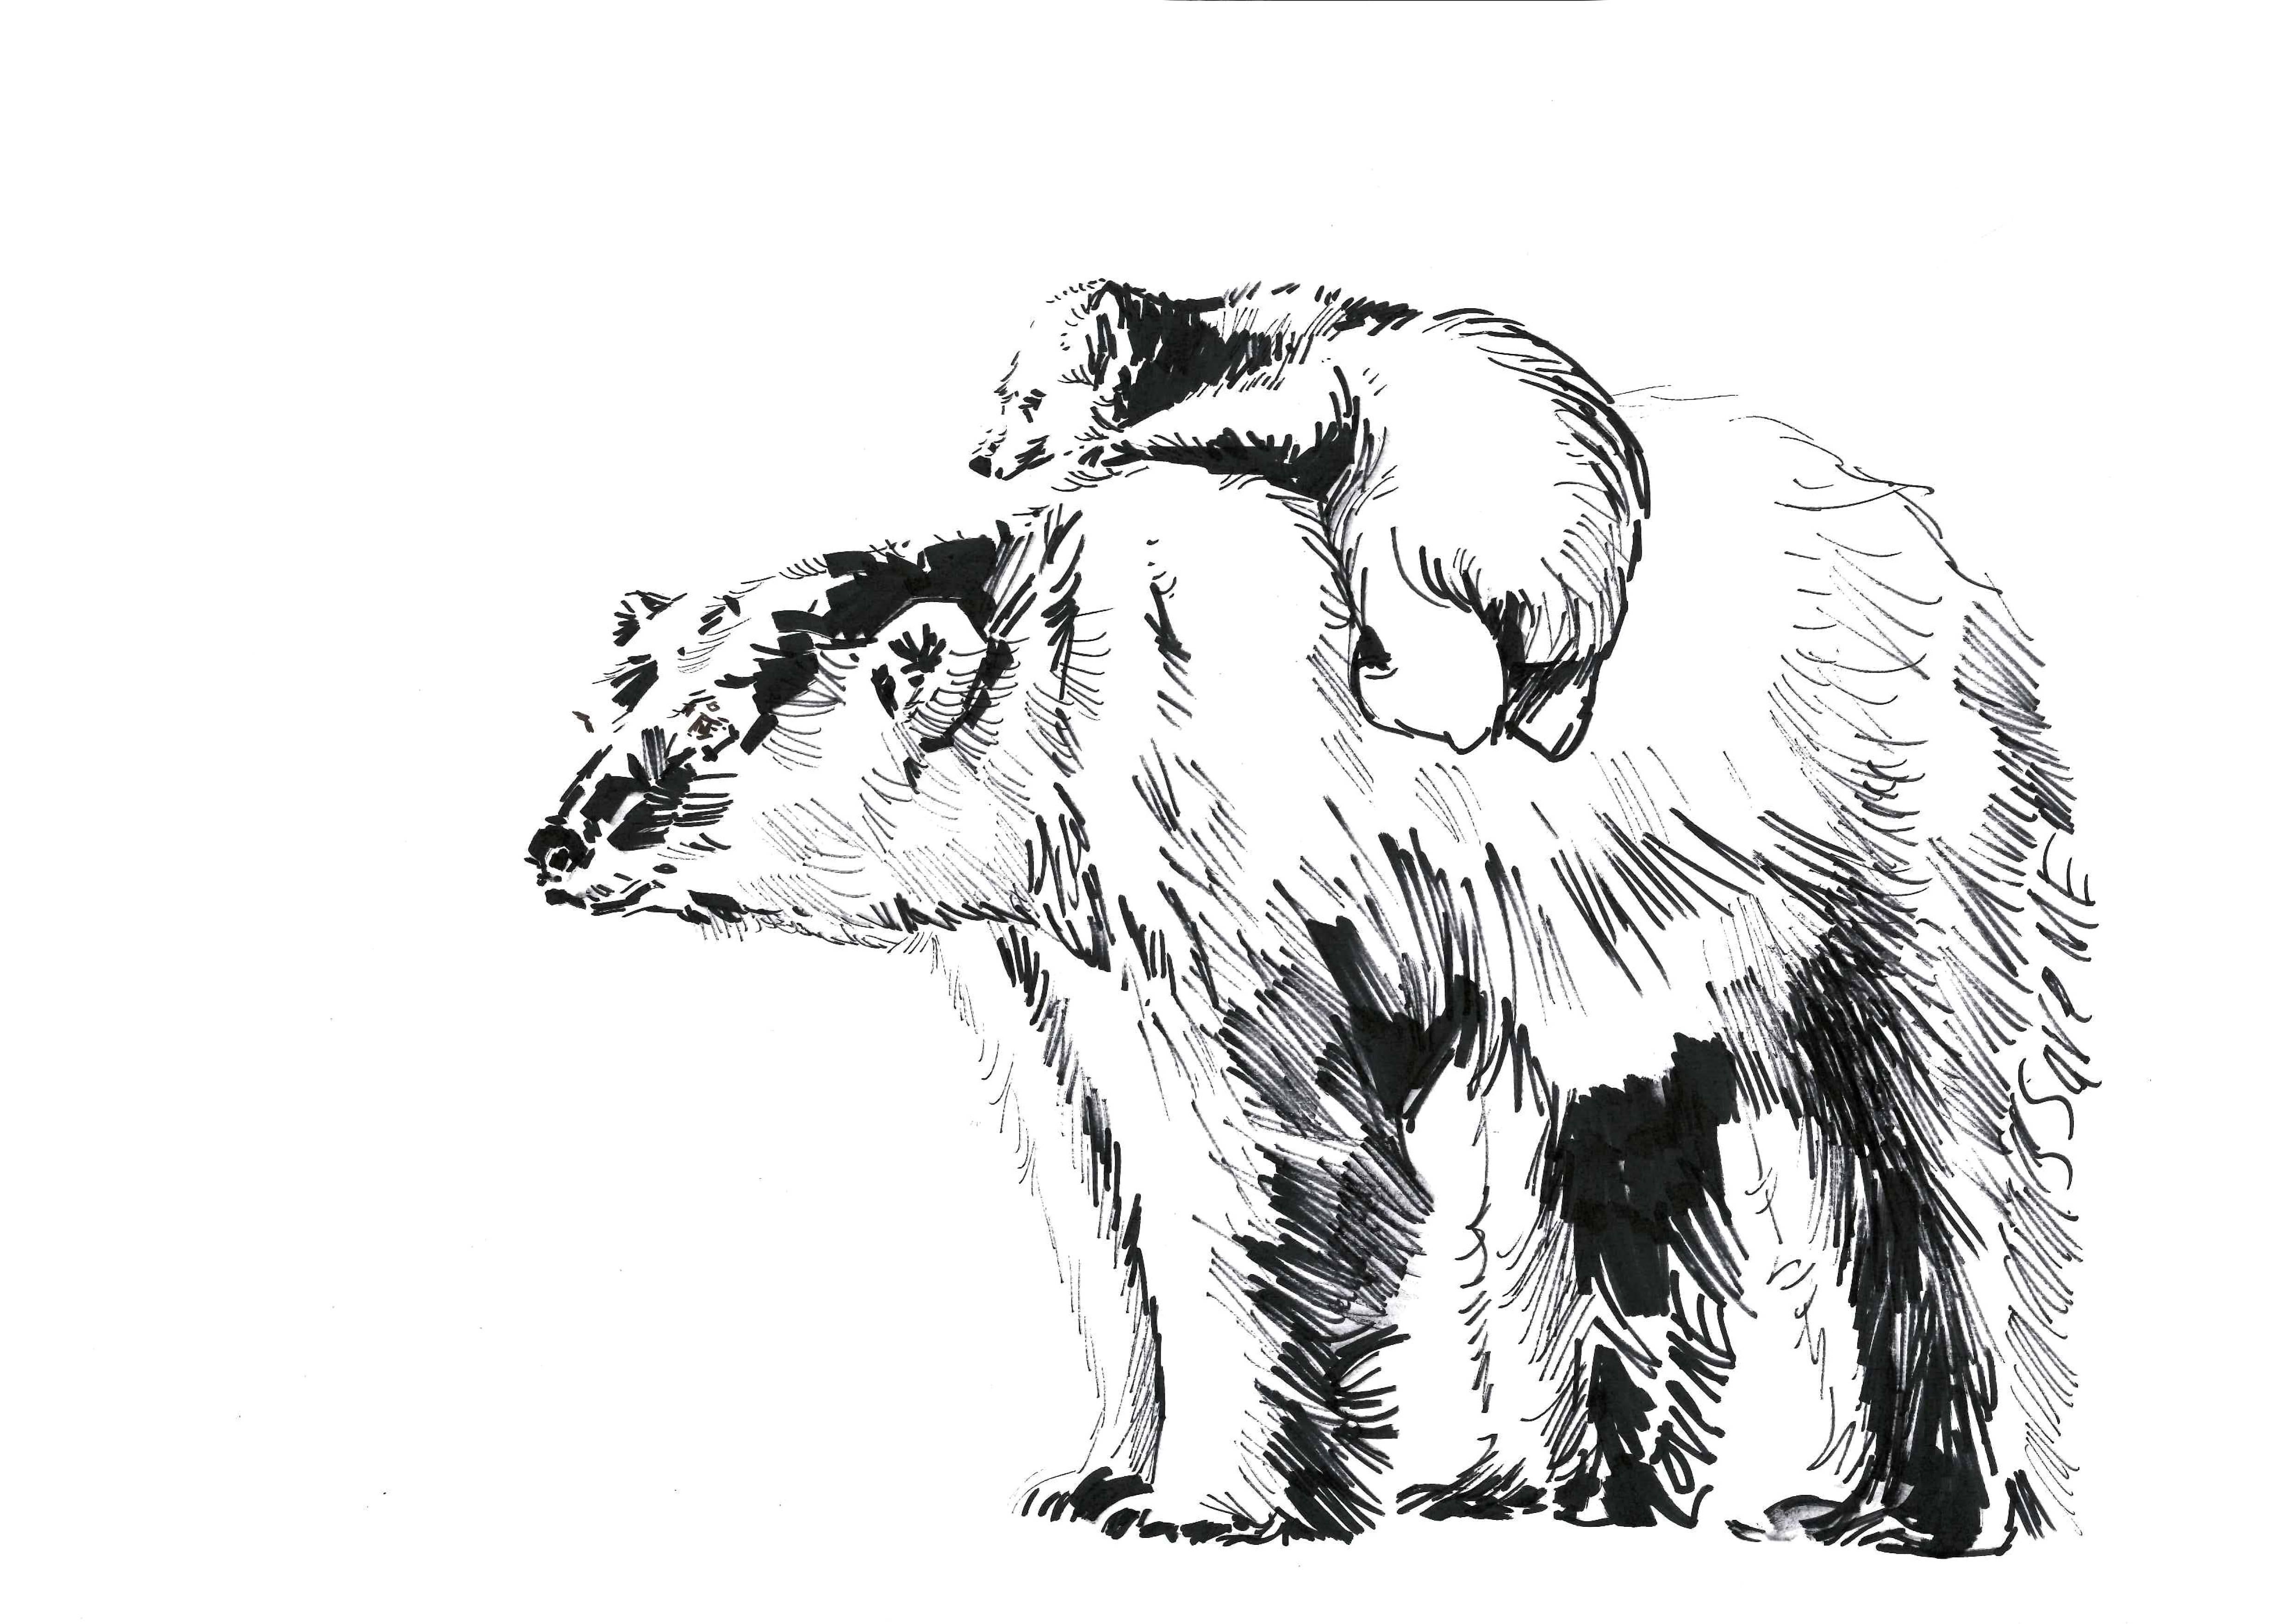 Metin Salih Animal Art - Love me Save Me, POLAR BEAR; portion of proceeds benefit WWF, signed & dedicated